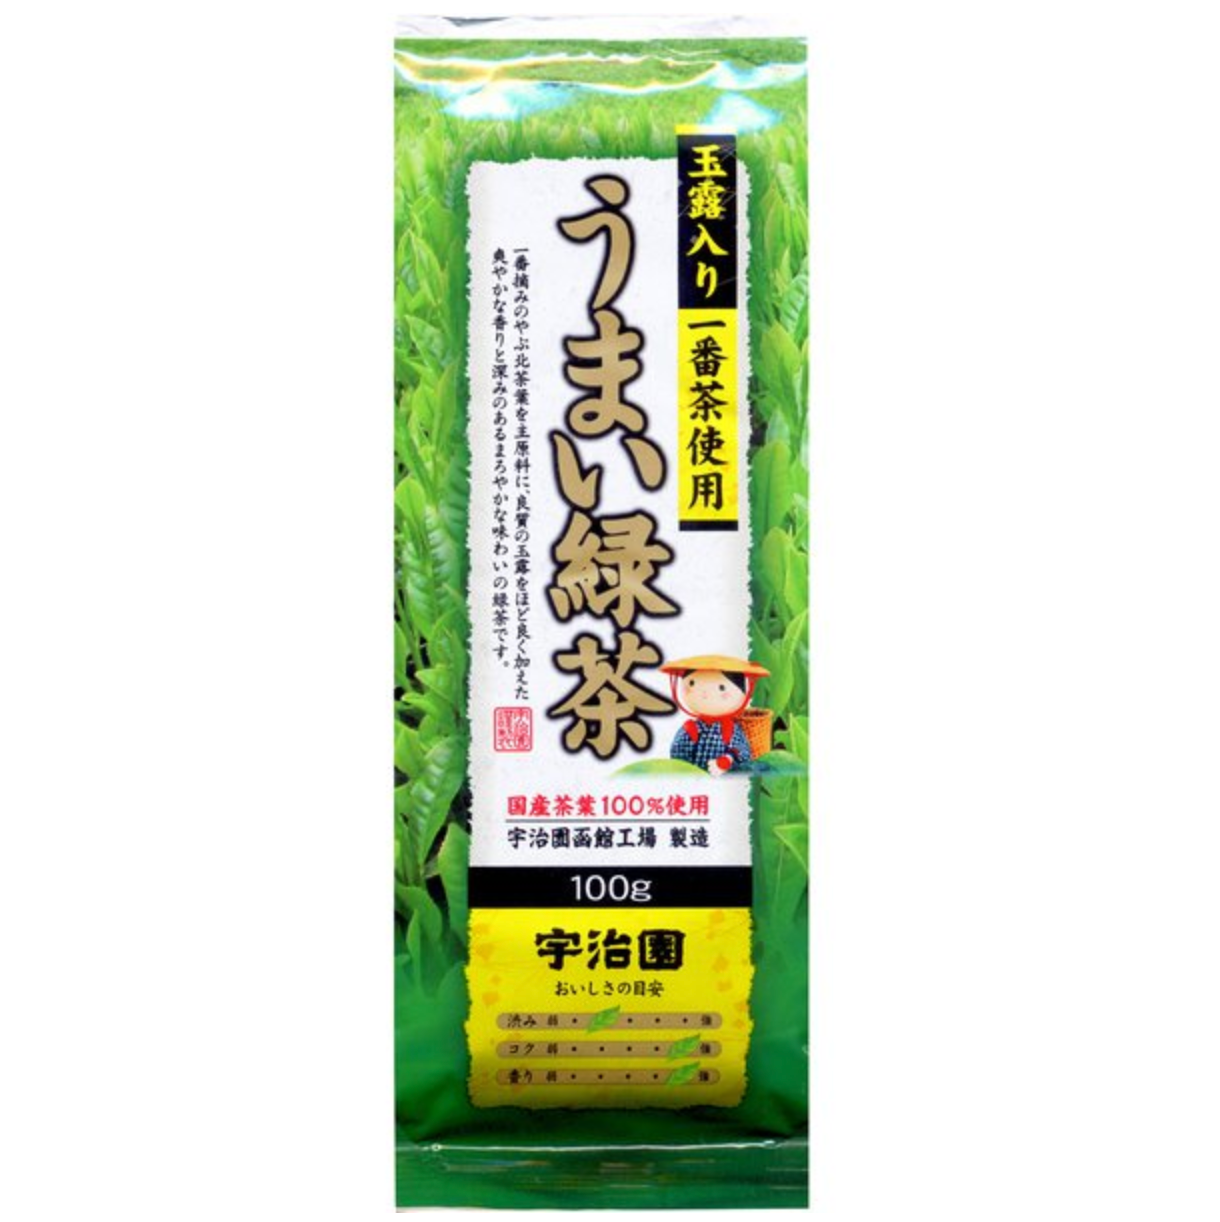 Ujien Delicious green tea with Gyokuro using Ichibancha 100g